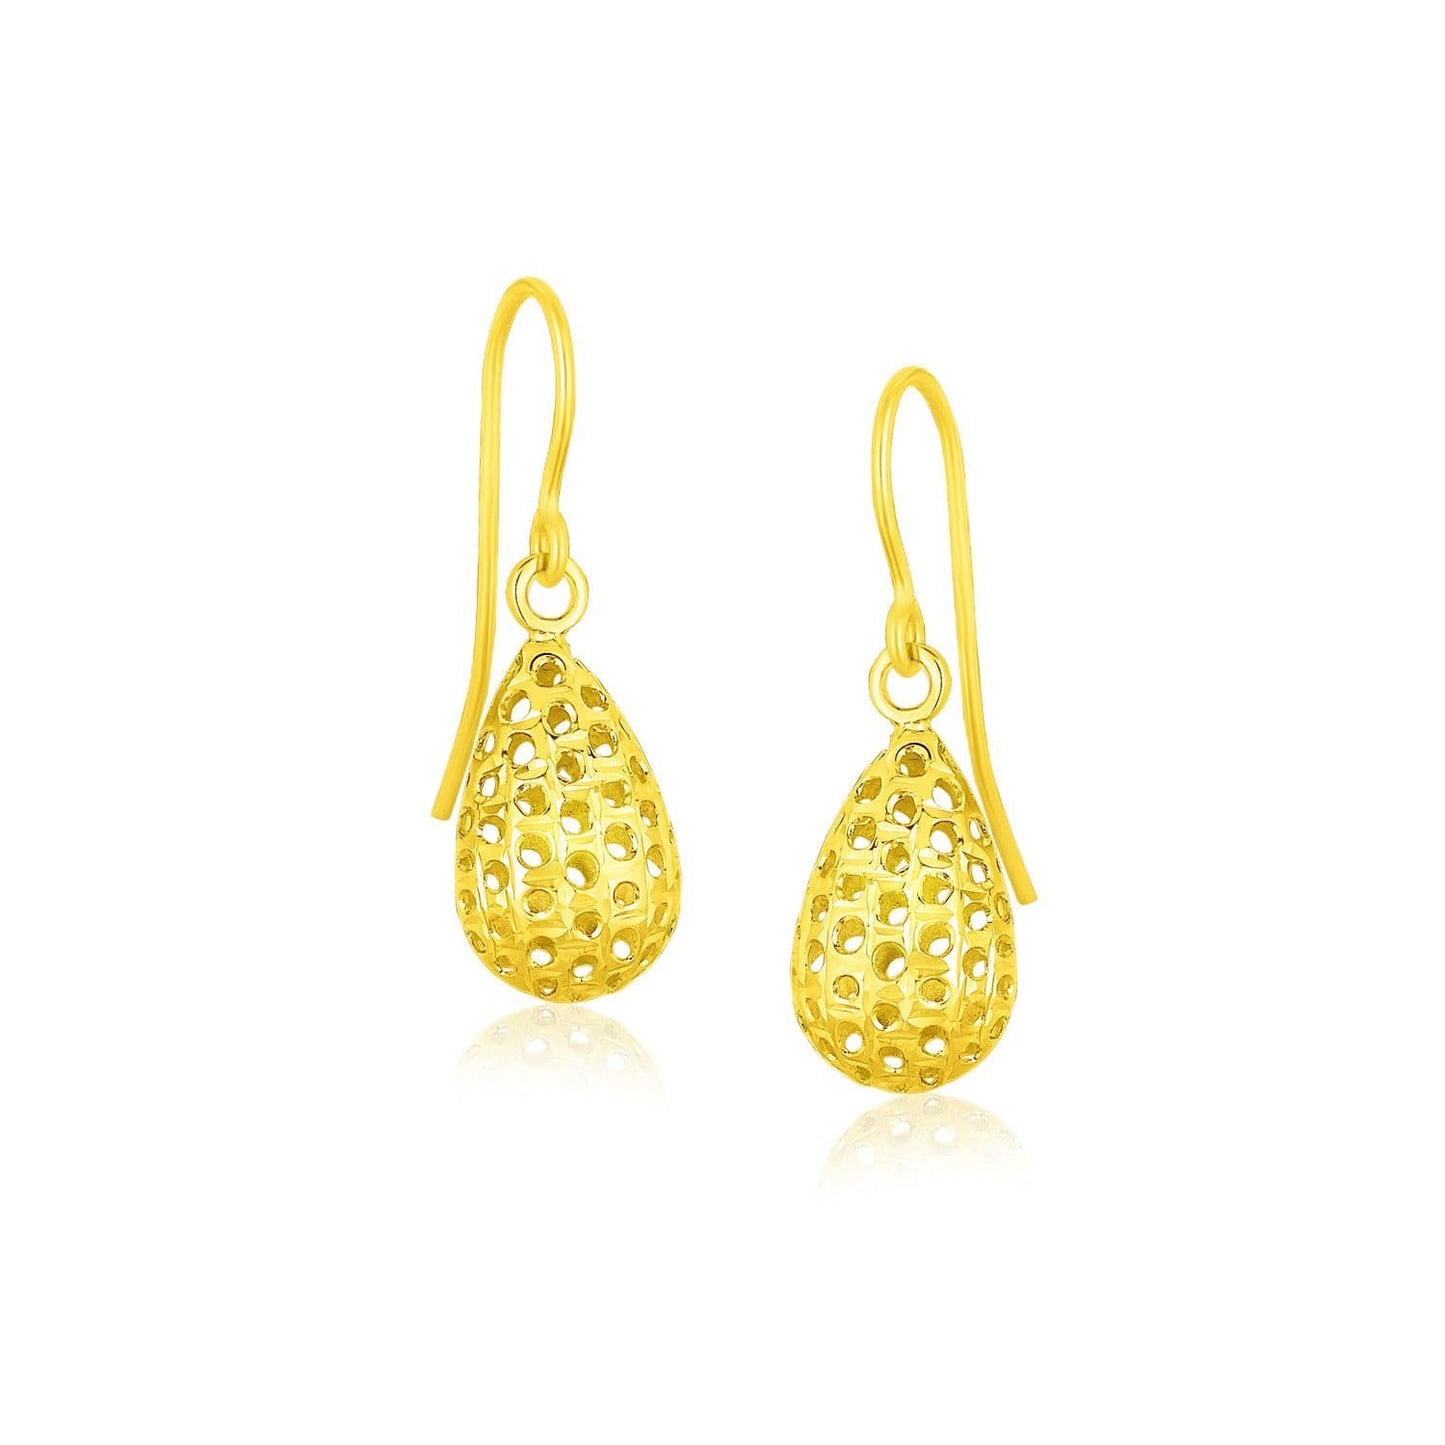 14k Yellow Gold Teardrop Dangle Earrings with Honeycomb Texture